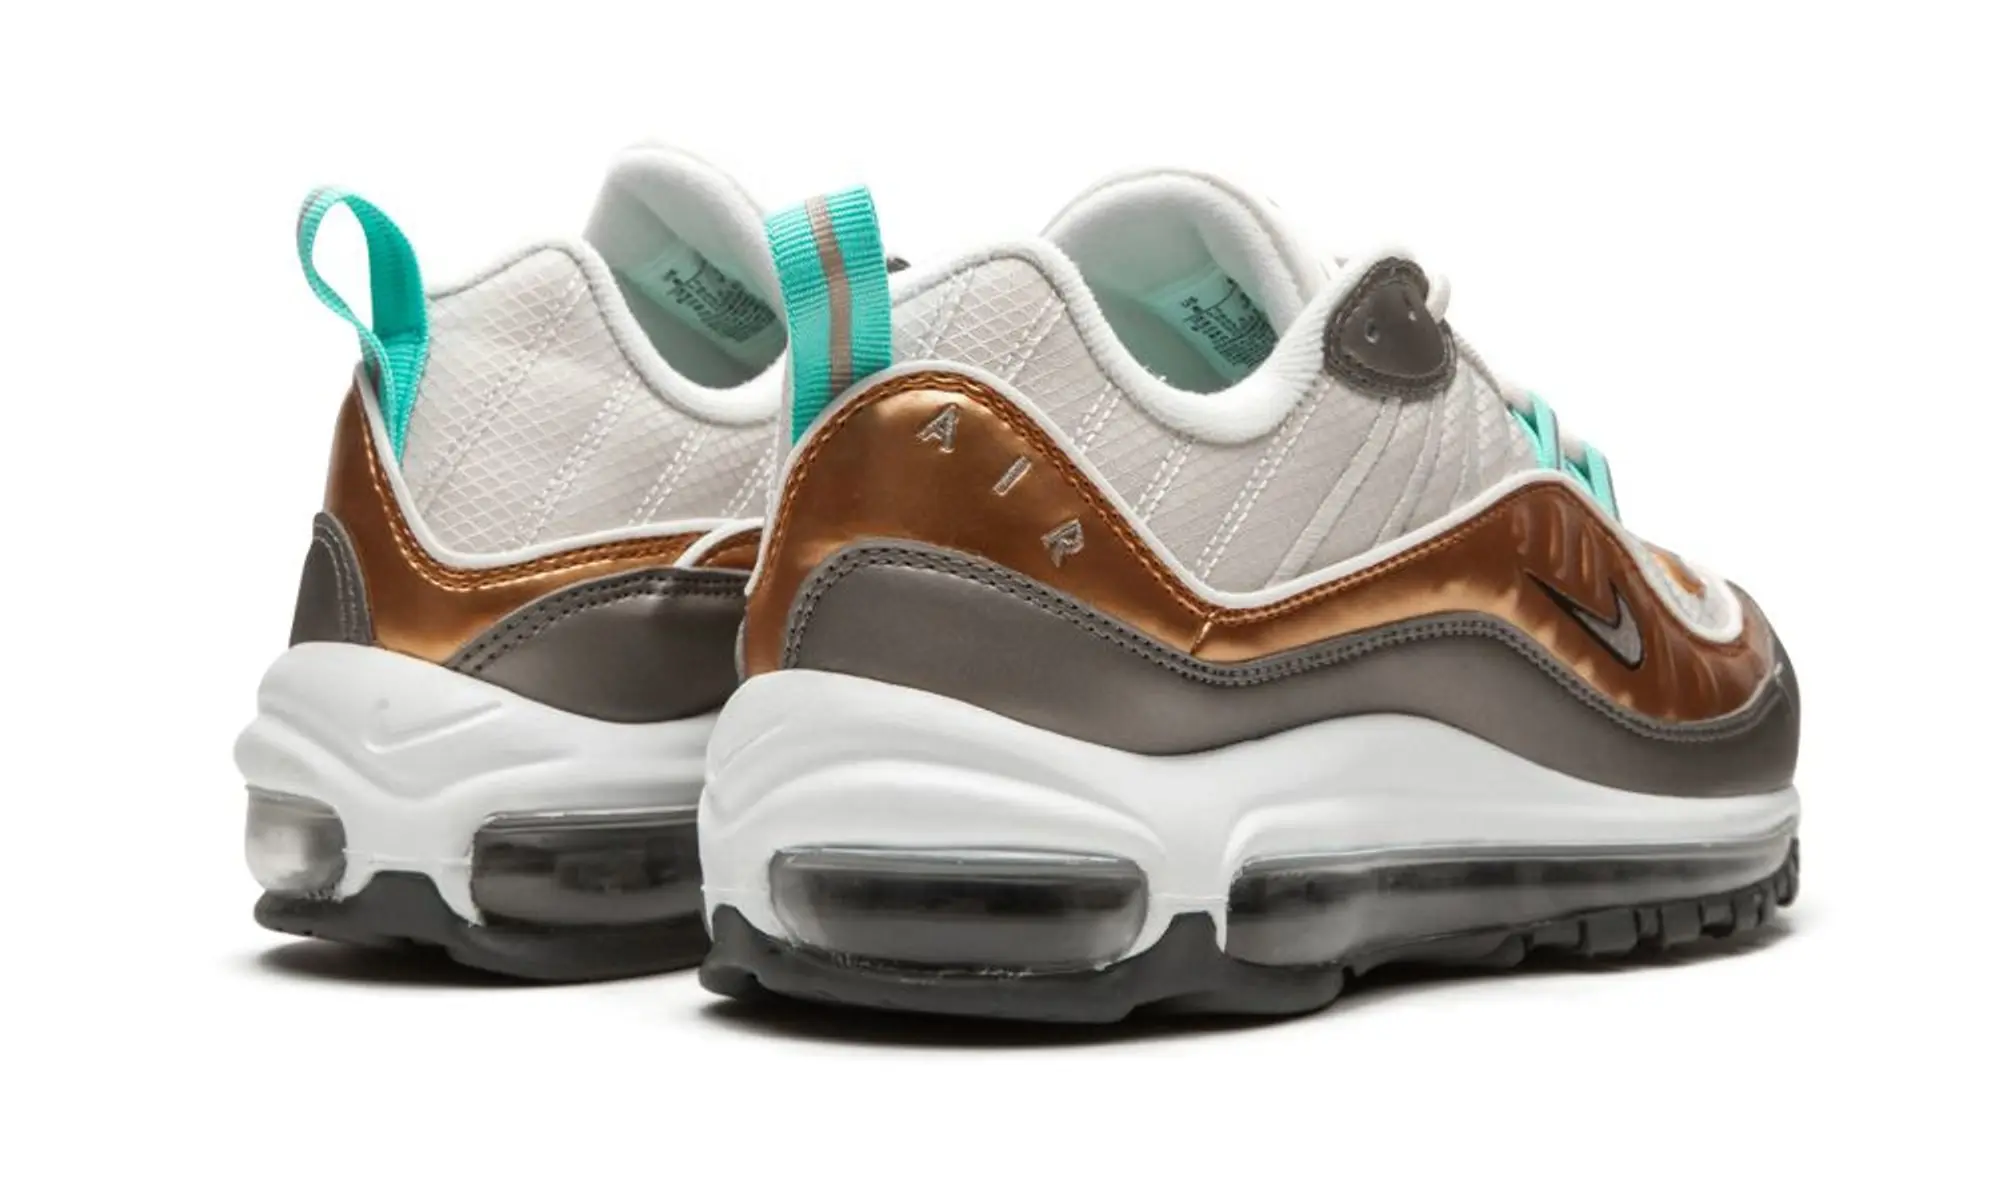 Nike Air Max 98 Womens Copper/Teal Shoes